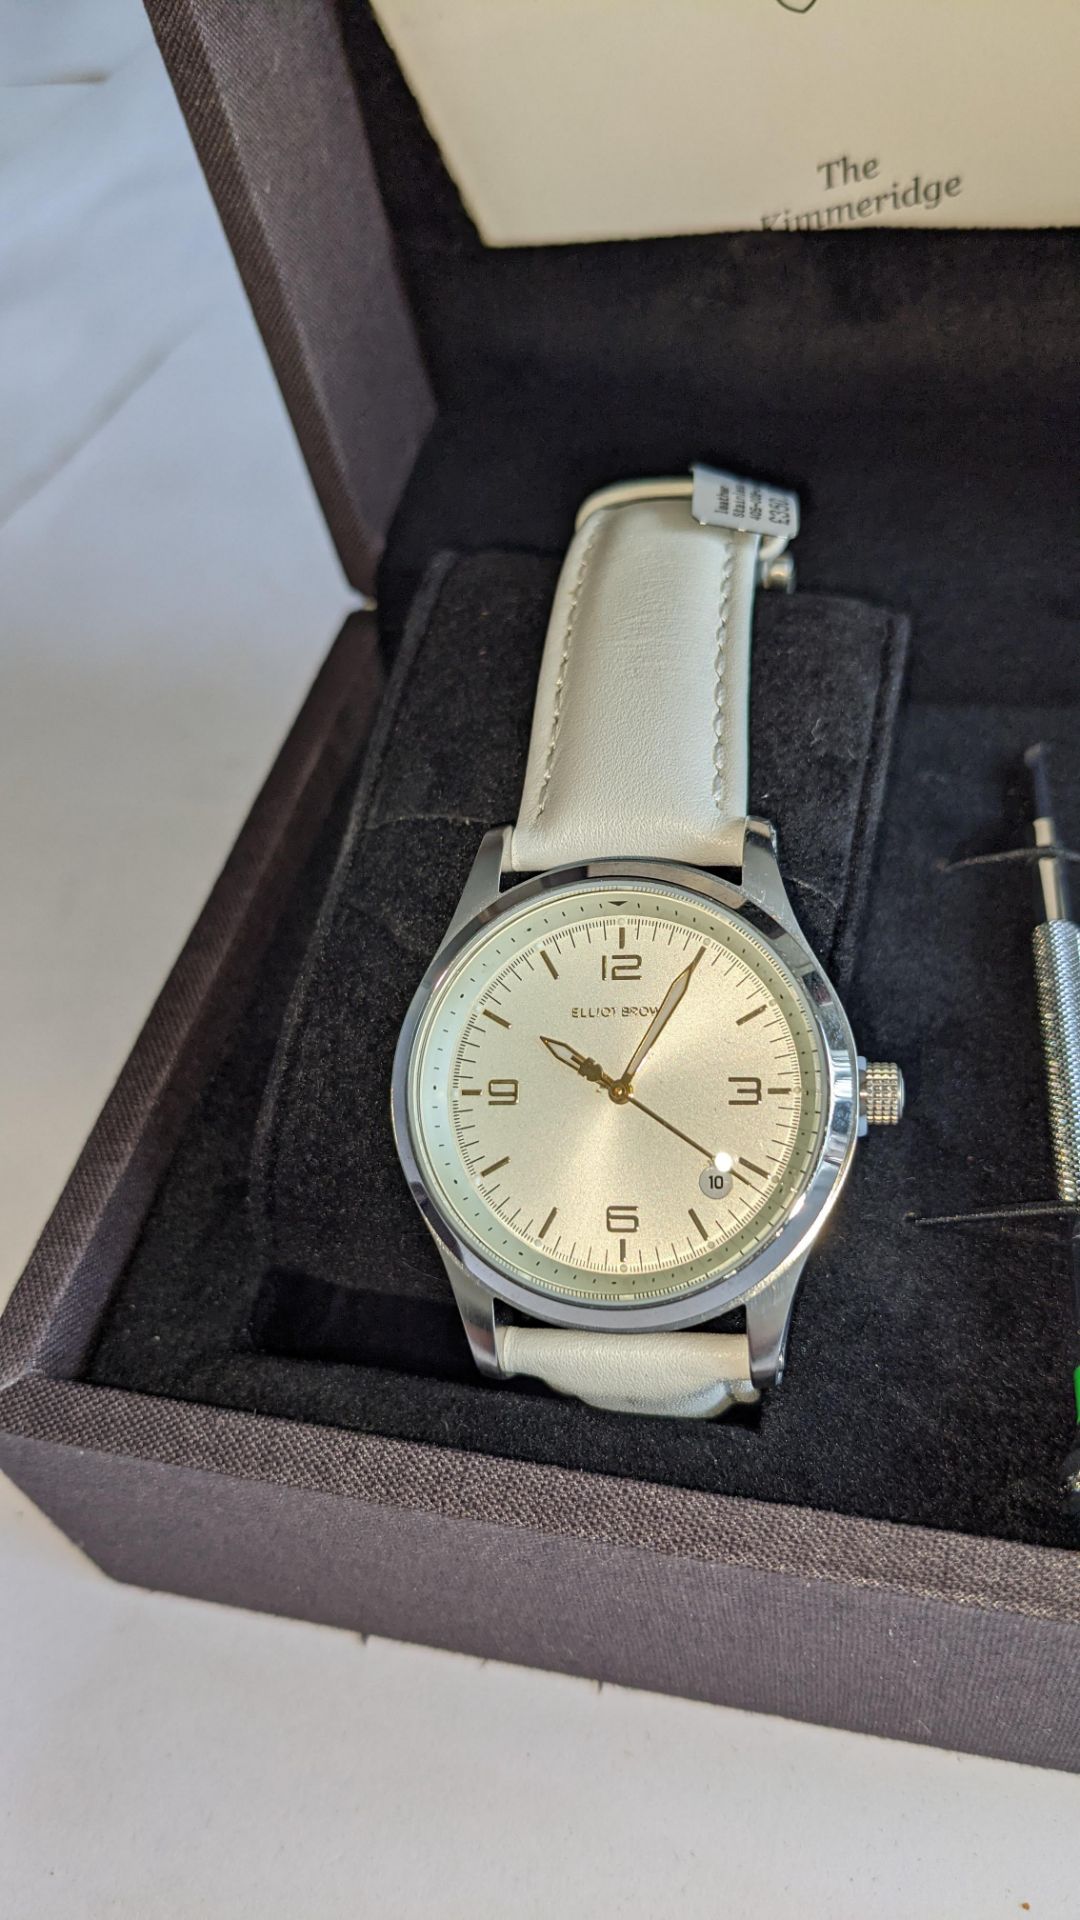 Elliot Brown The Kimmeridge watch, product code 405-008-L54. Stainless steel, 200M water resistant, - Image 5 of 18